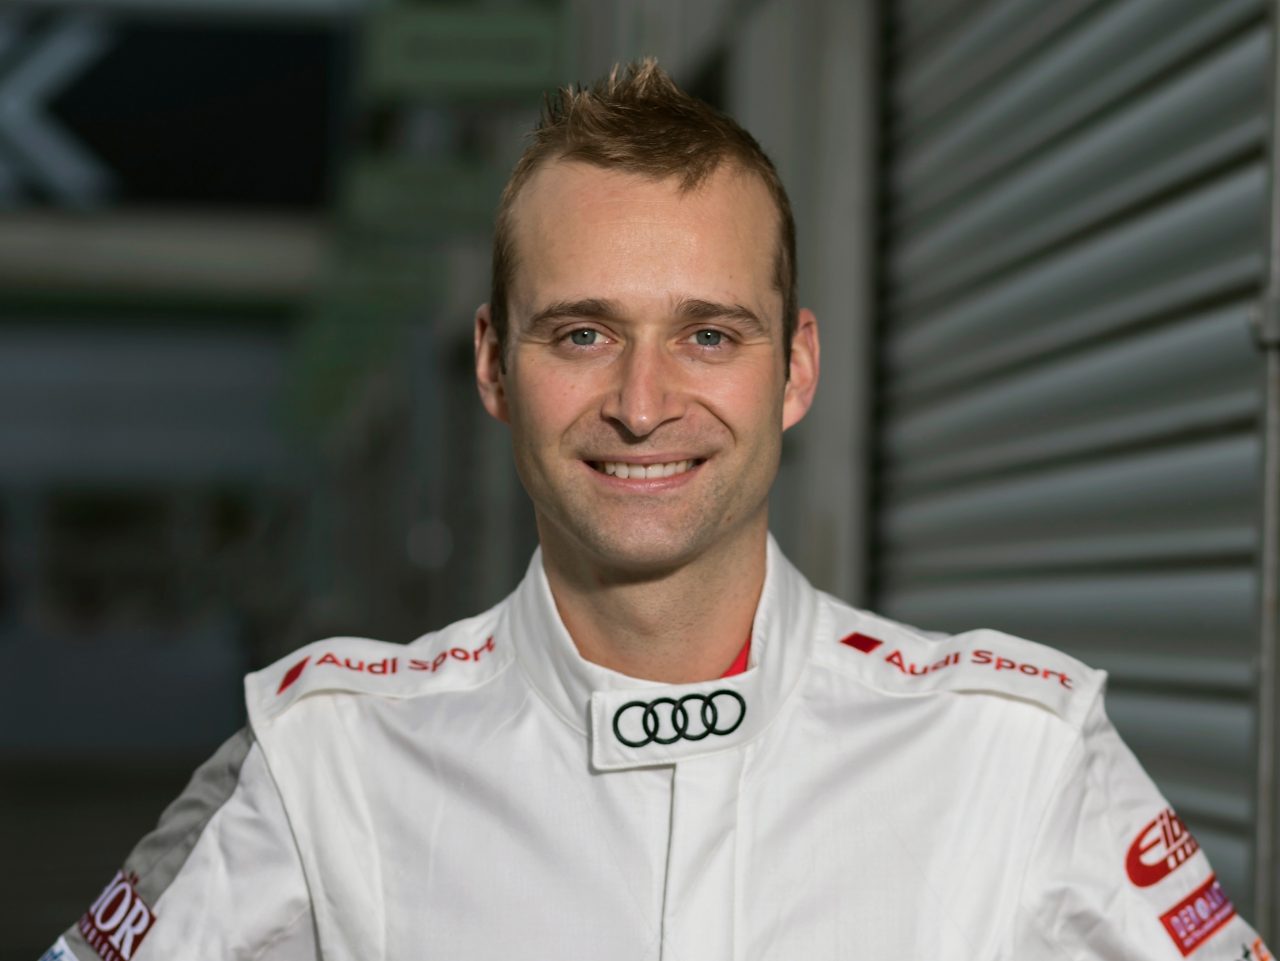 Der Audi Sport-Fahrer Christopher Haase 